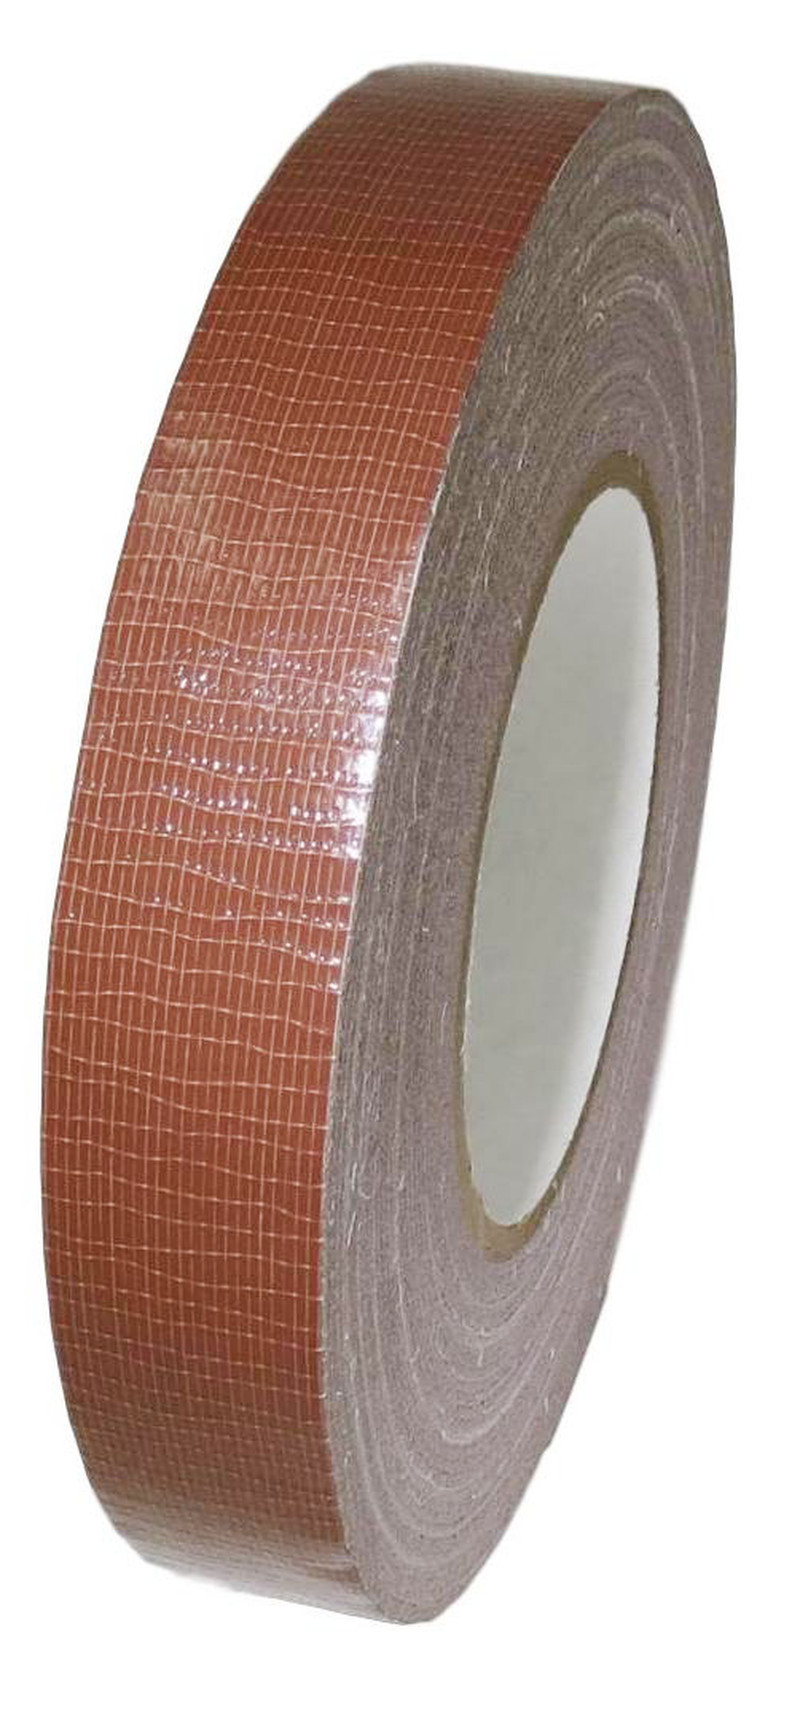 Industrial Duct Tape T.R.U Waterproof UV Resistant Ochre 1/2 in X 60 Yd. 